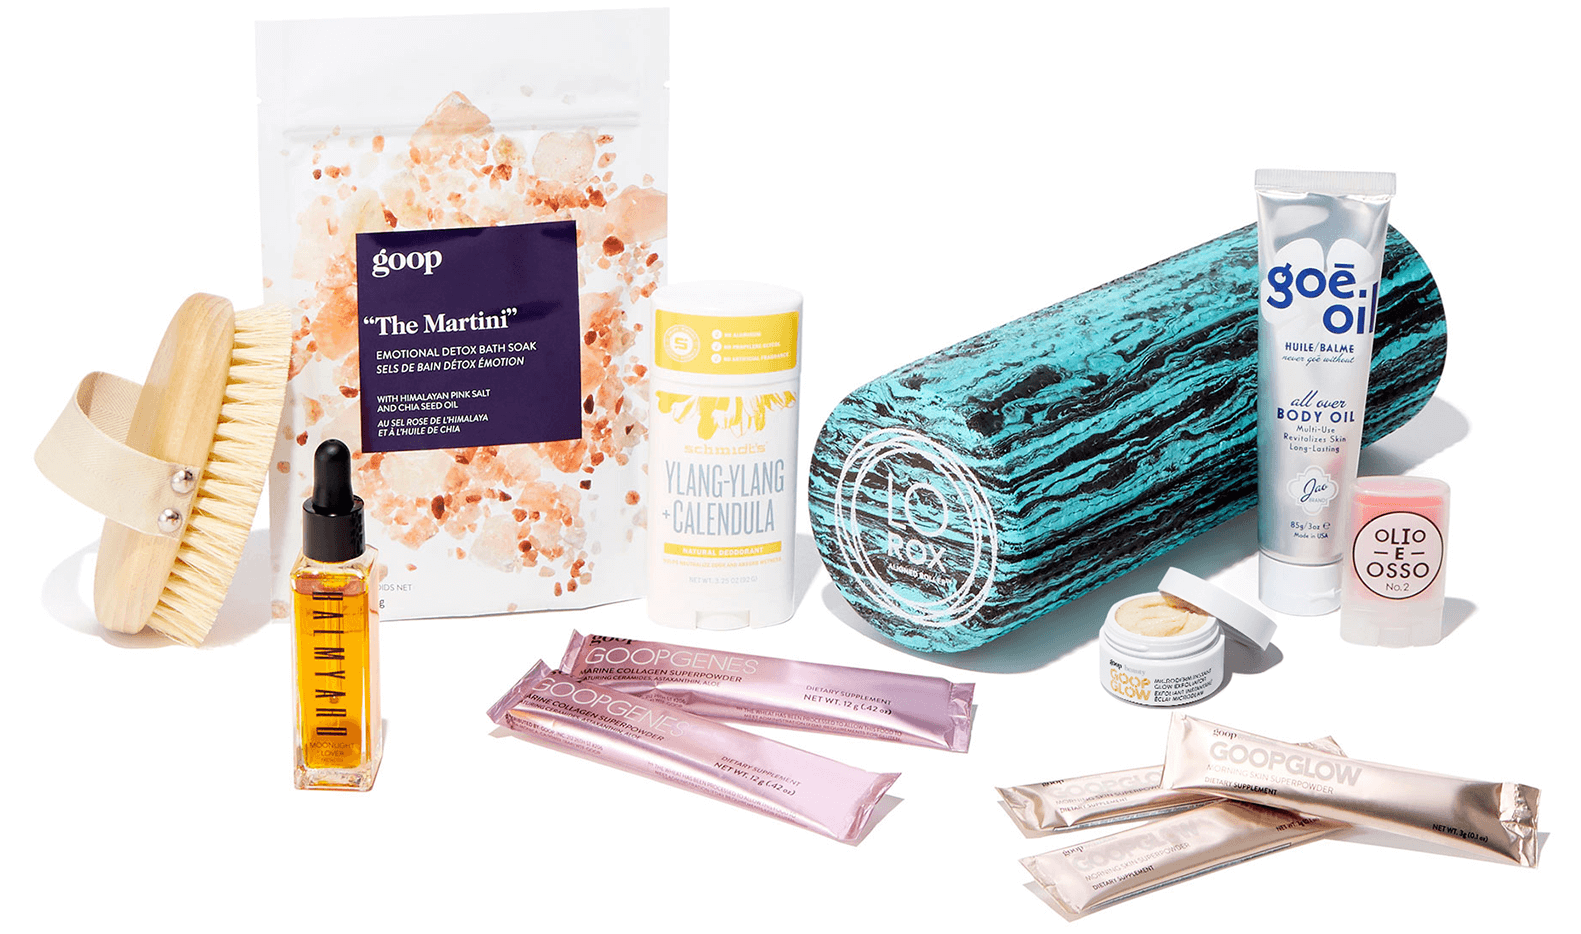 The goop Clean Beauty Starter Kit